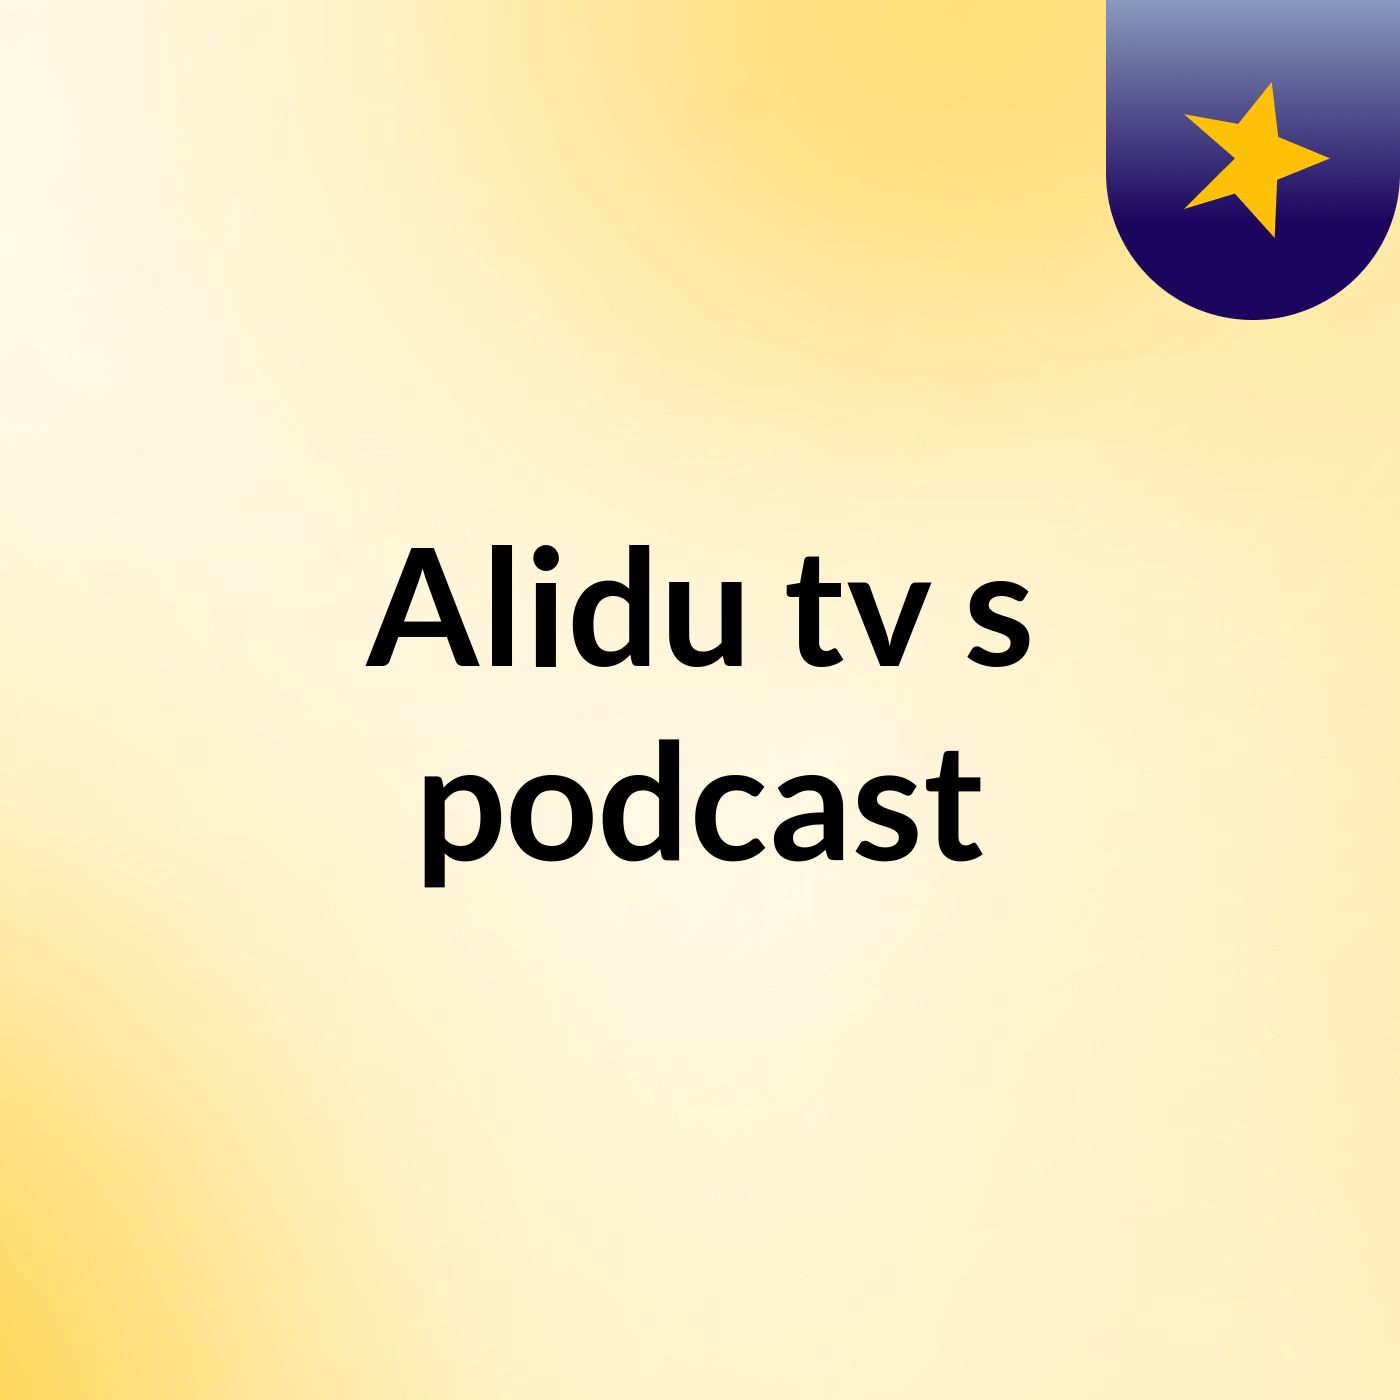 Alidu tv's podcast